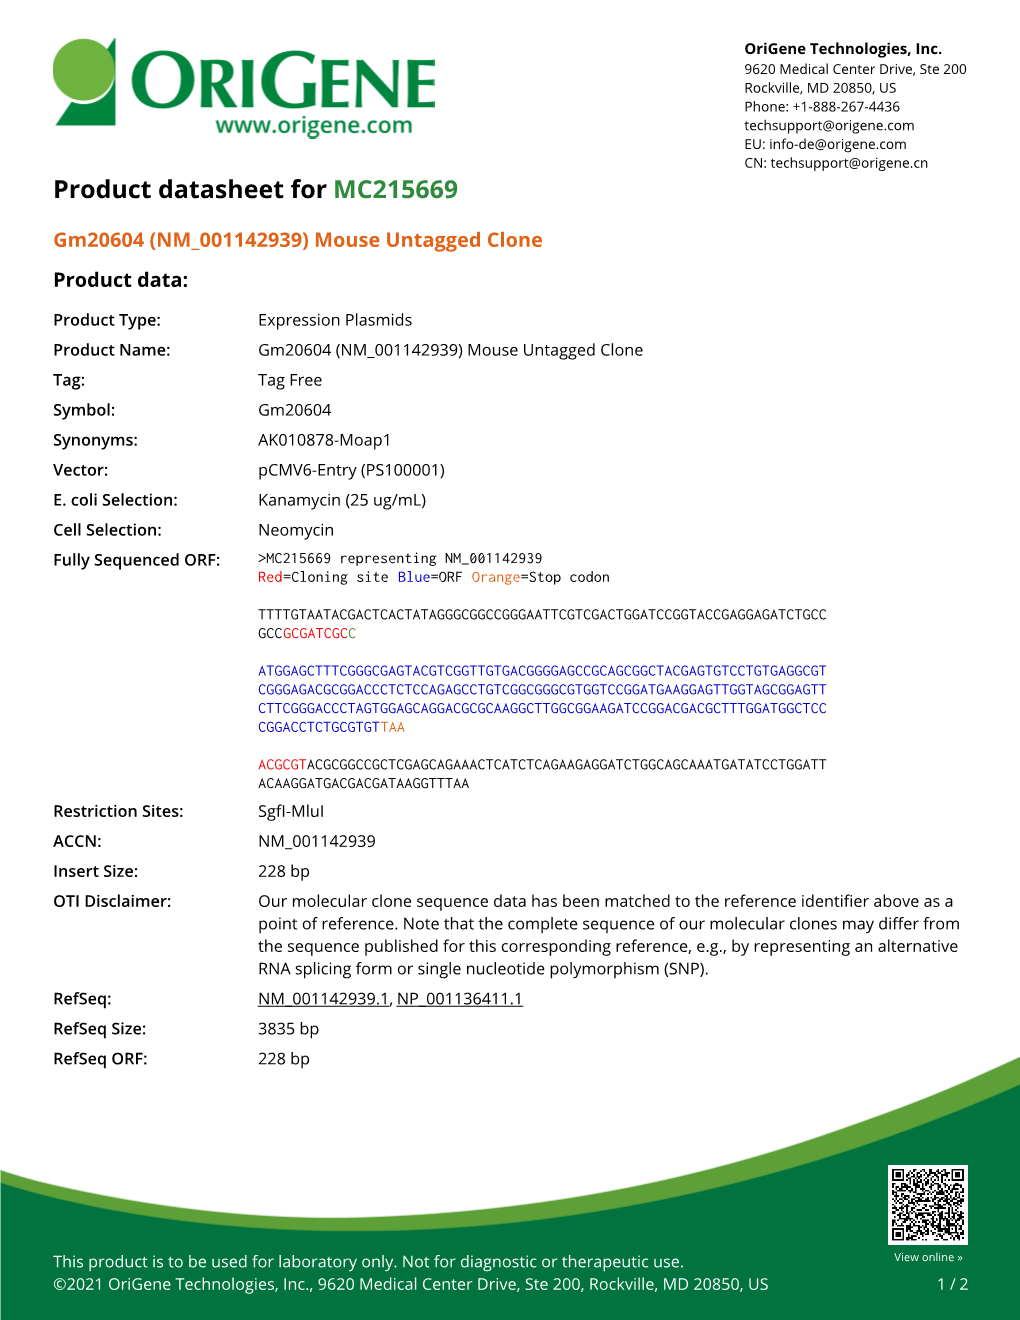 (NM 001142939) Mouse Untagged Clone – MC215669